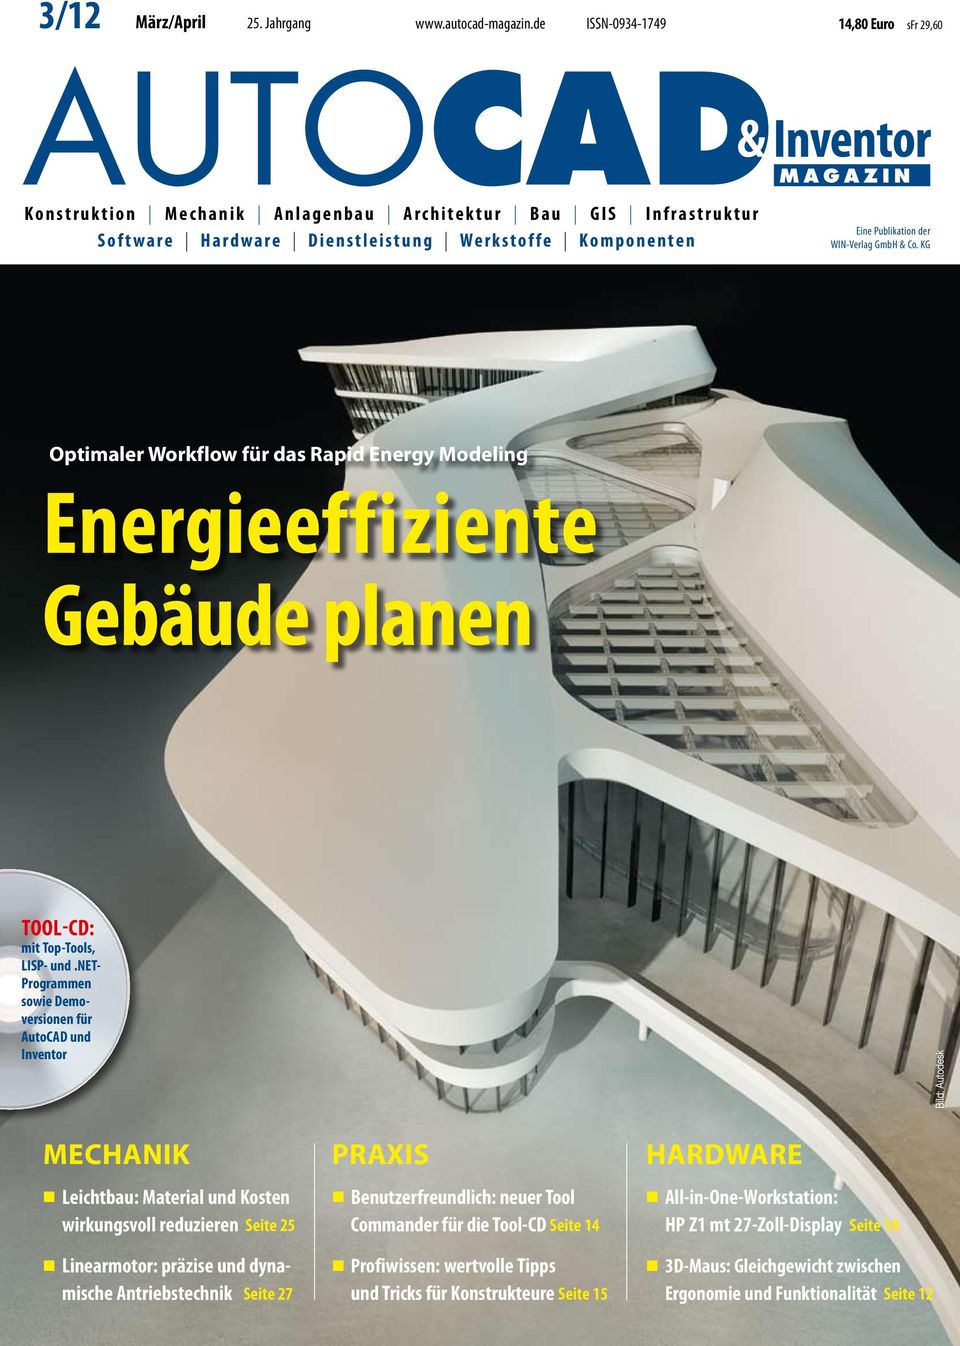 GmbH & Co. KG Optimaler Workflow für das Rapid Energy Modeling Energieeffiziente Gebäde planen TOOL-CD: mit Top-Tools, LISP- nd.